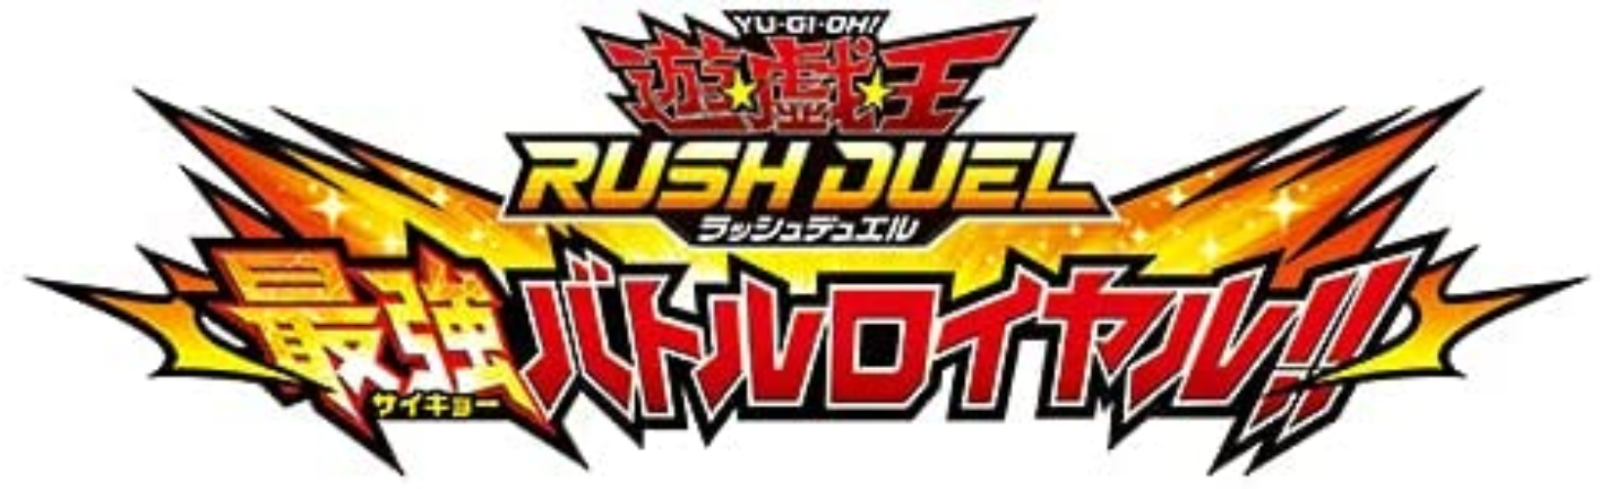 Nintendo Switch yu-gi-oh! Rush Duel sterkste Battle Royale met 3Cards Japan